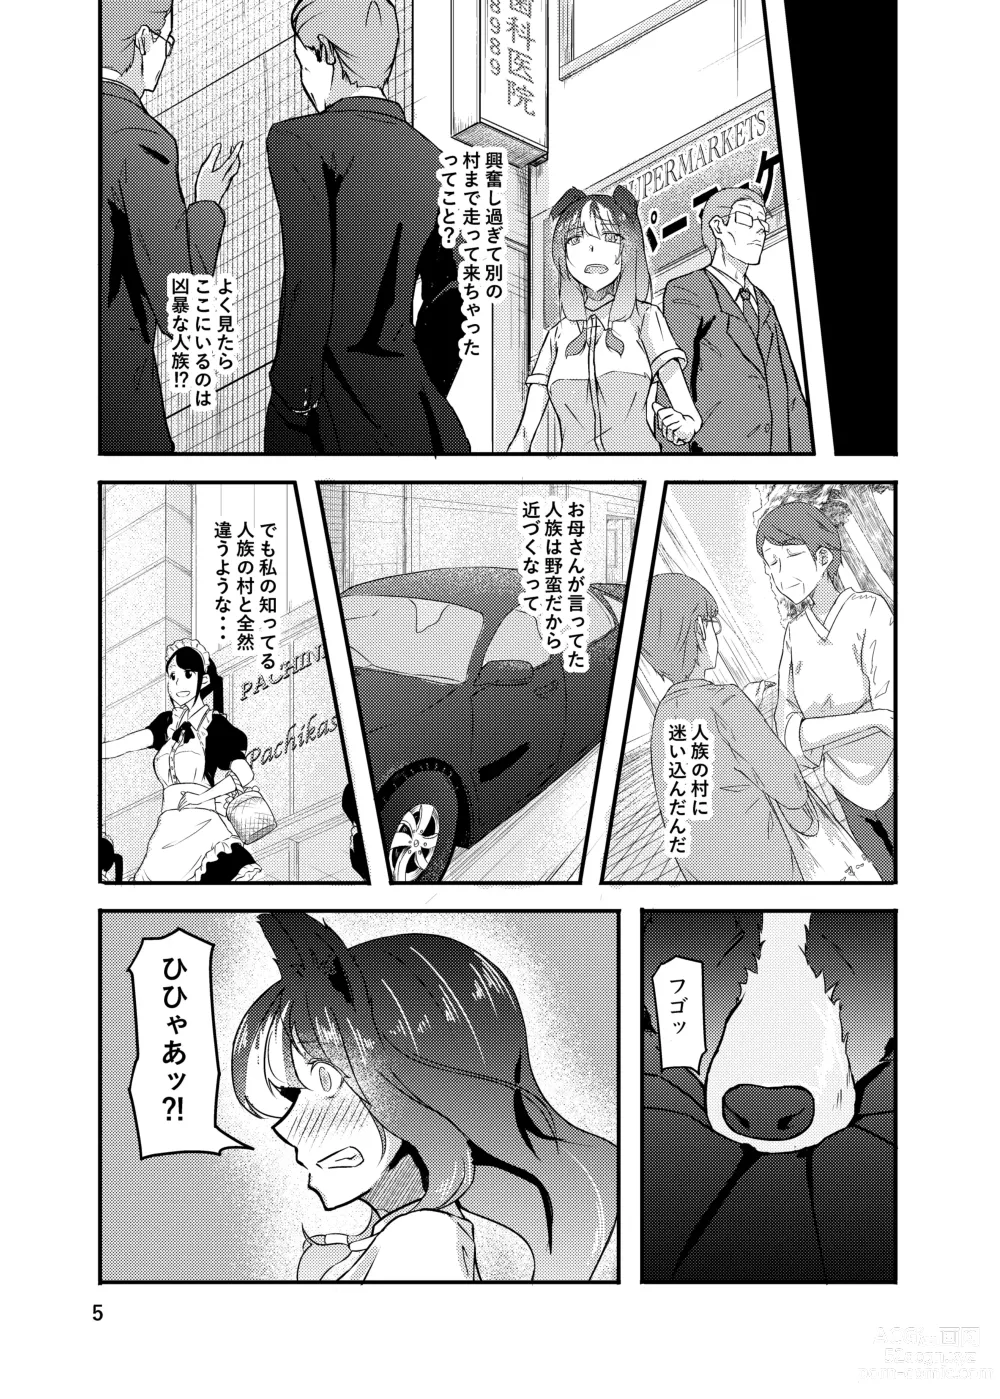 Page 5 of doujinshi Isekai kara no Juujin